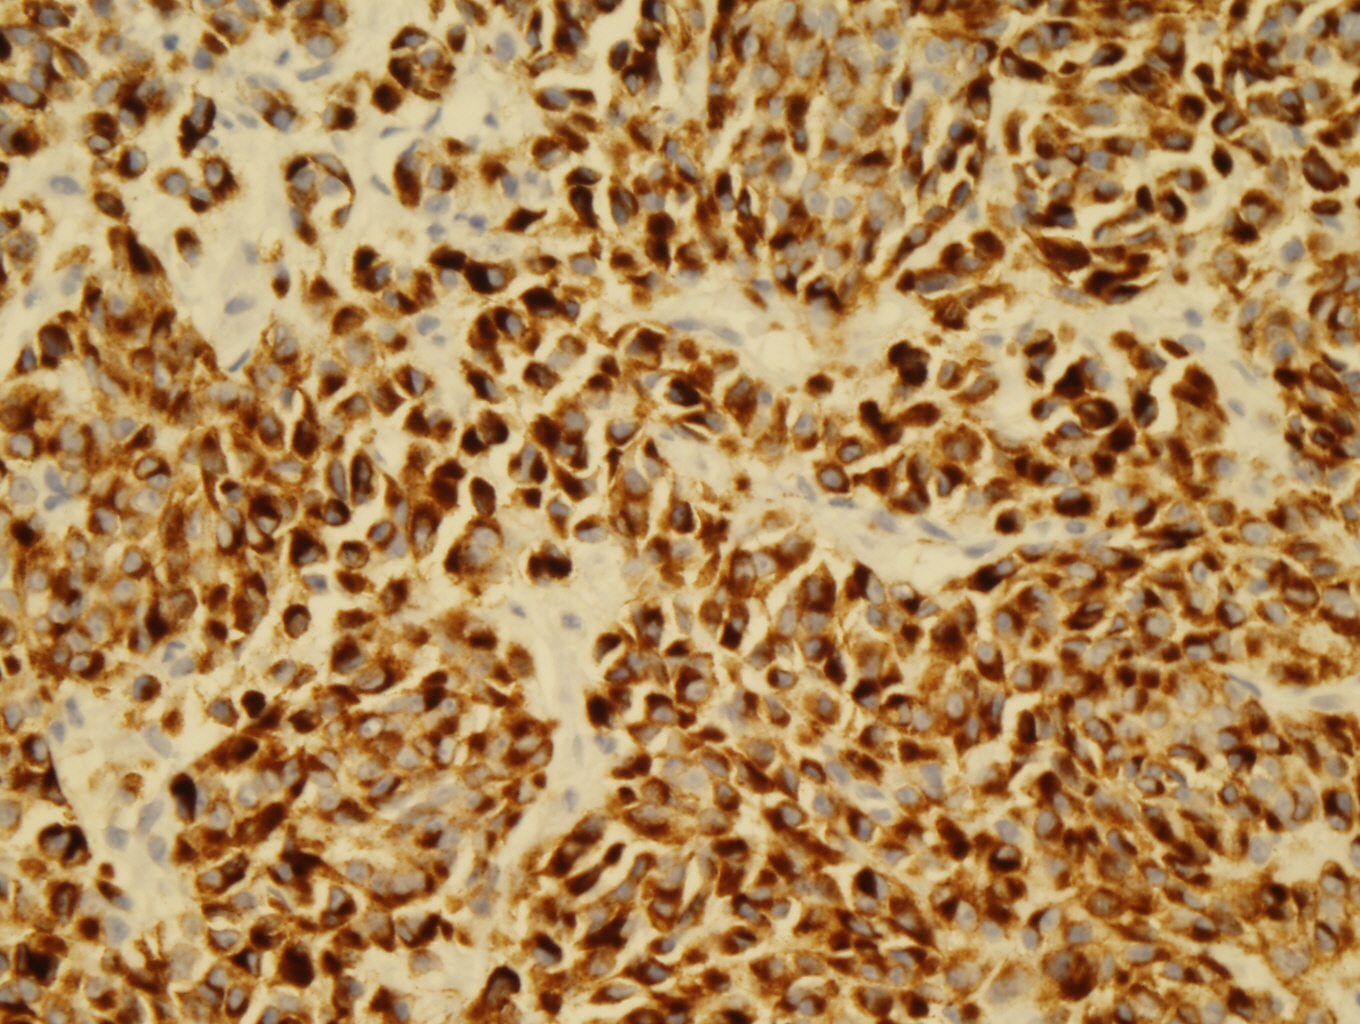 Microscopic image 6 - Liver core biopsy, HMB45 (Click to enlarge)